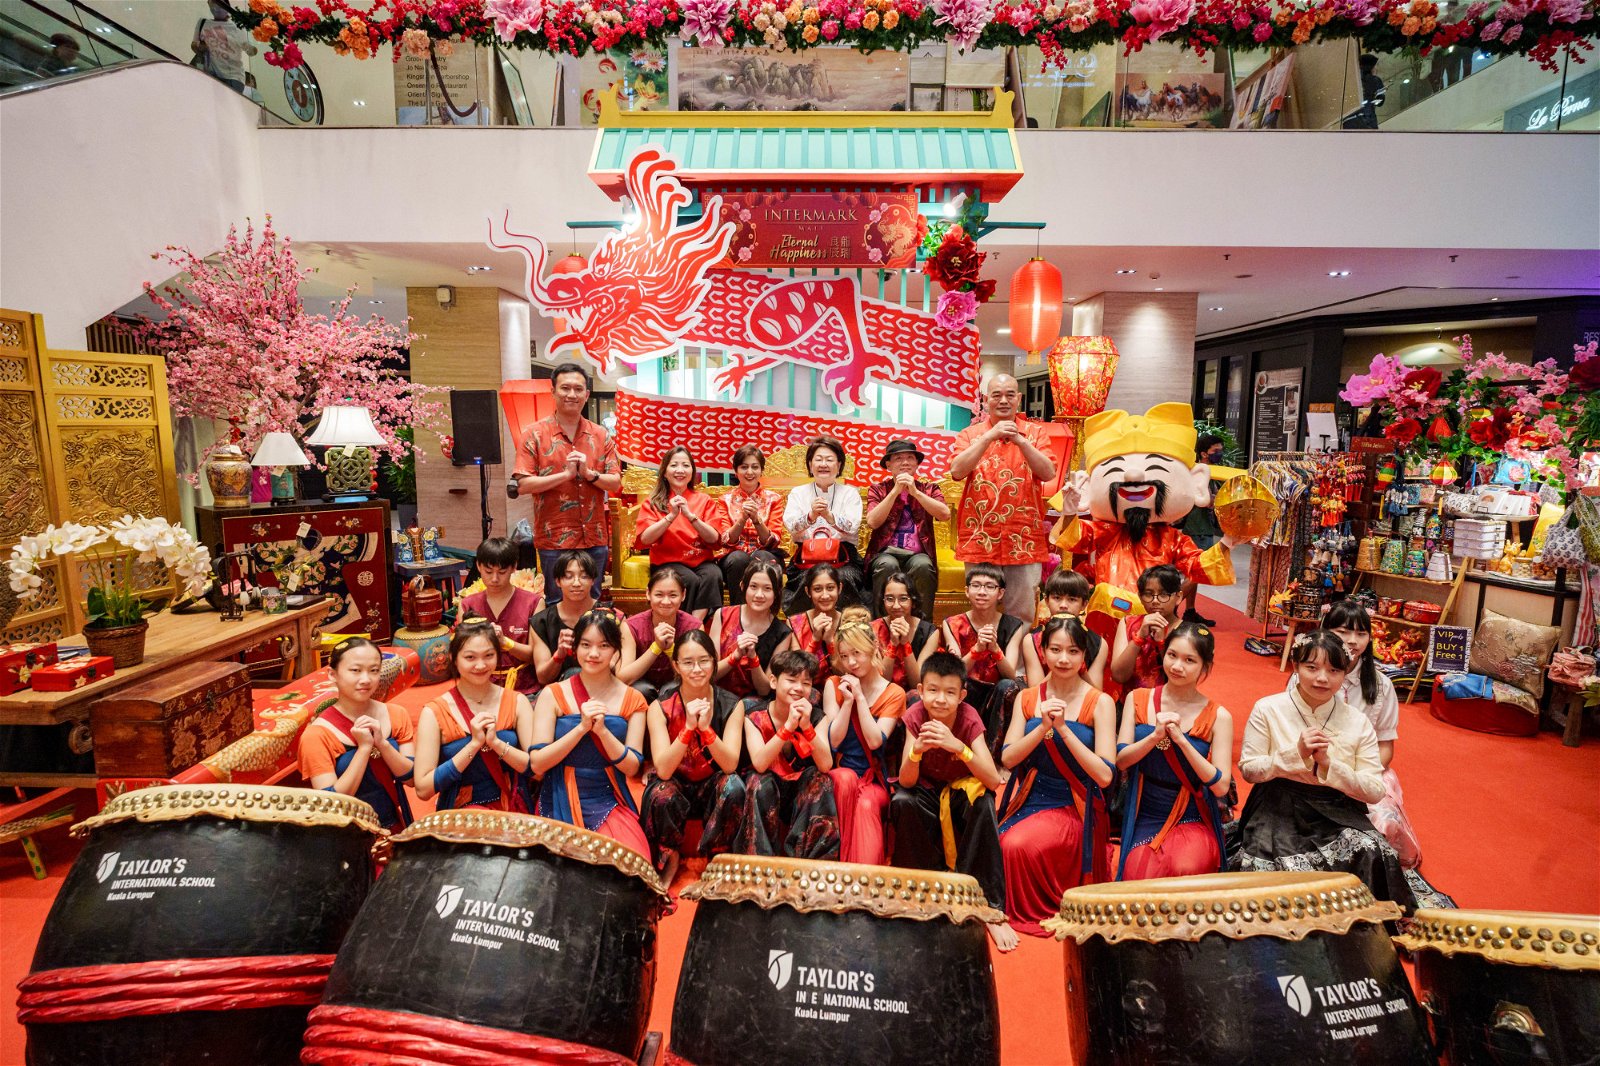 Intermark Mall即日起至2月25日期间推出“永恒幸福”的华丽新年庆典